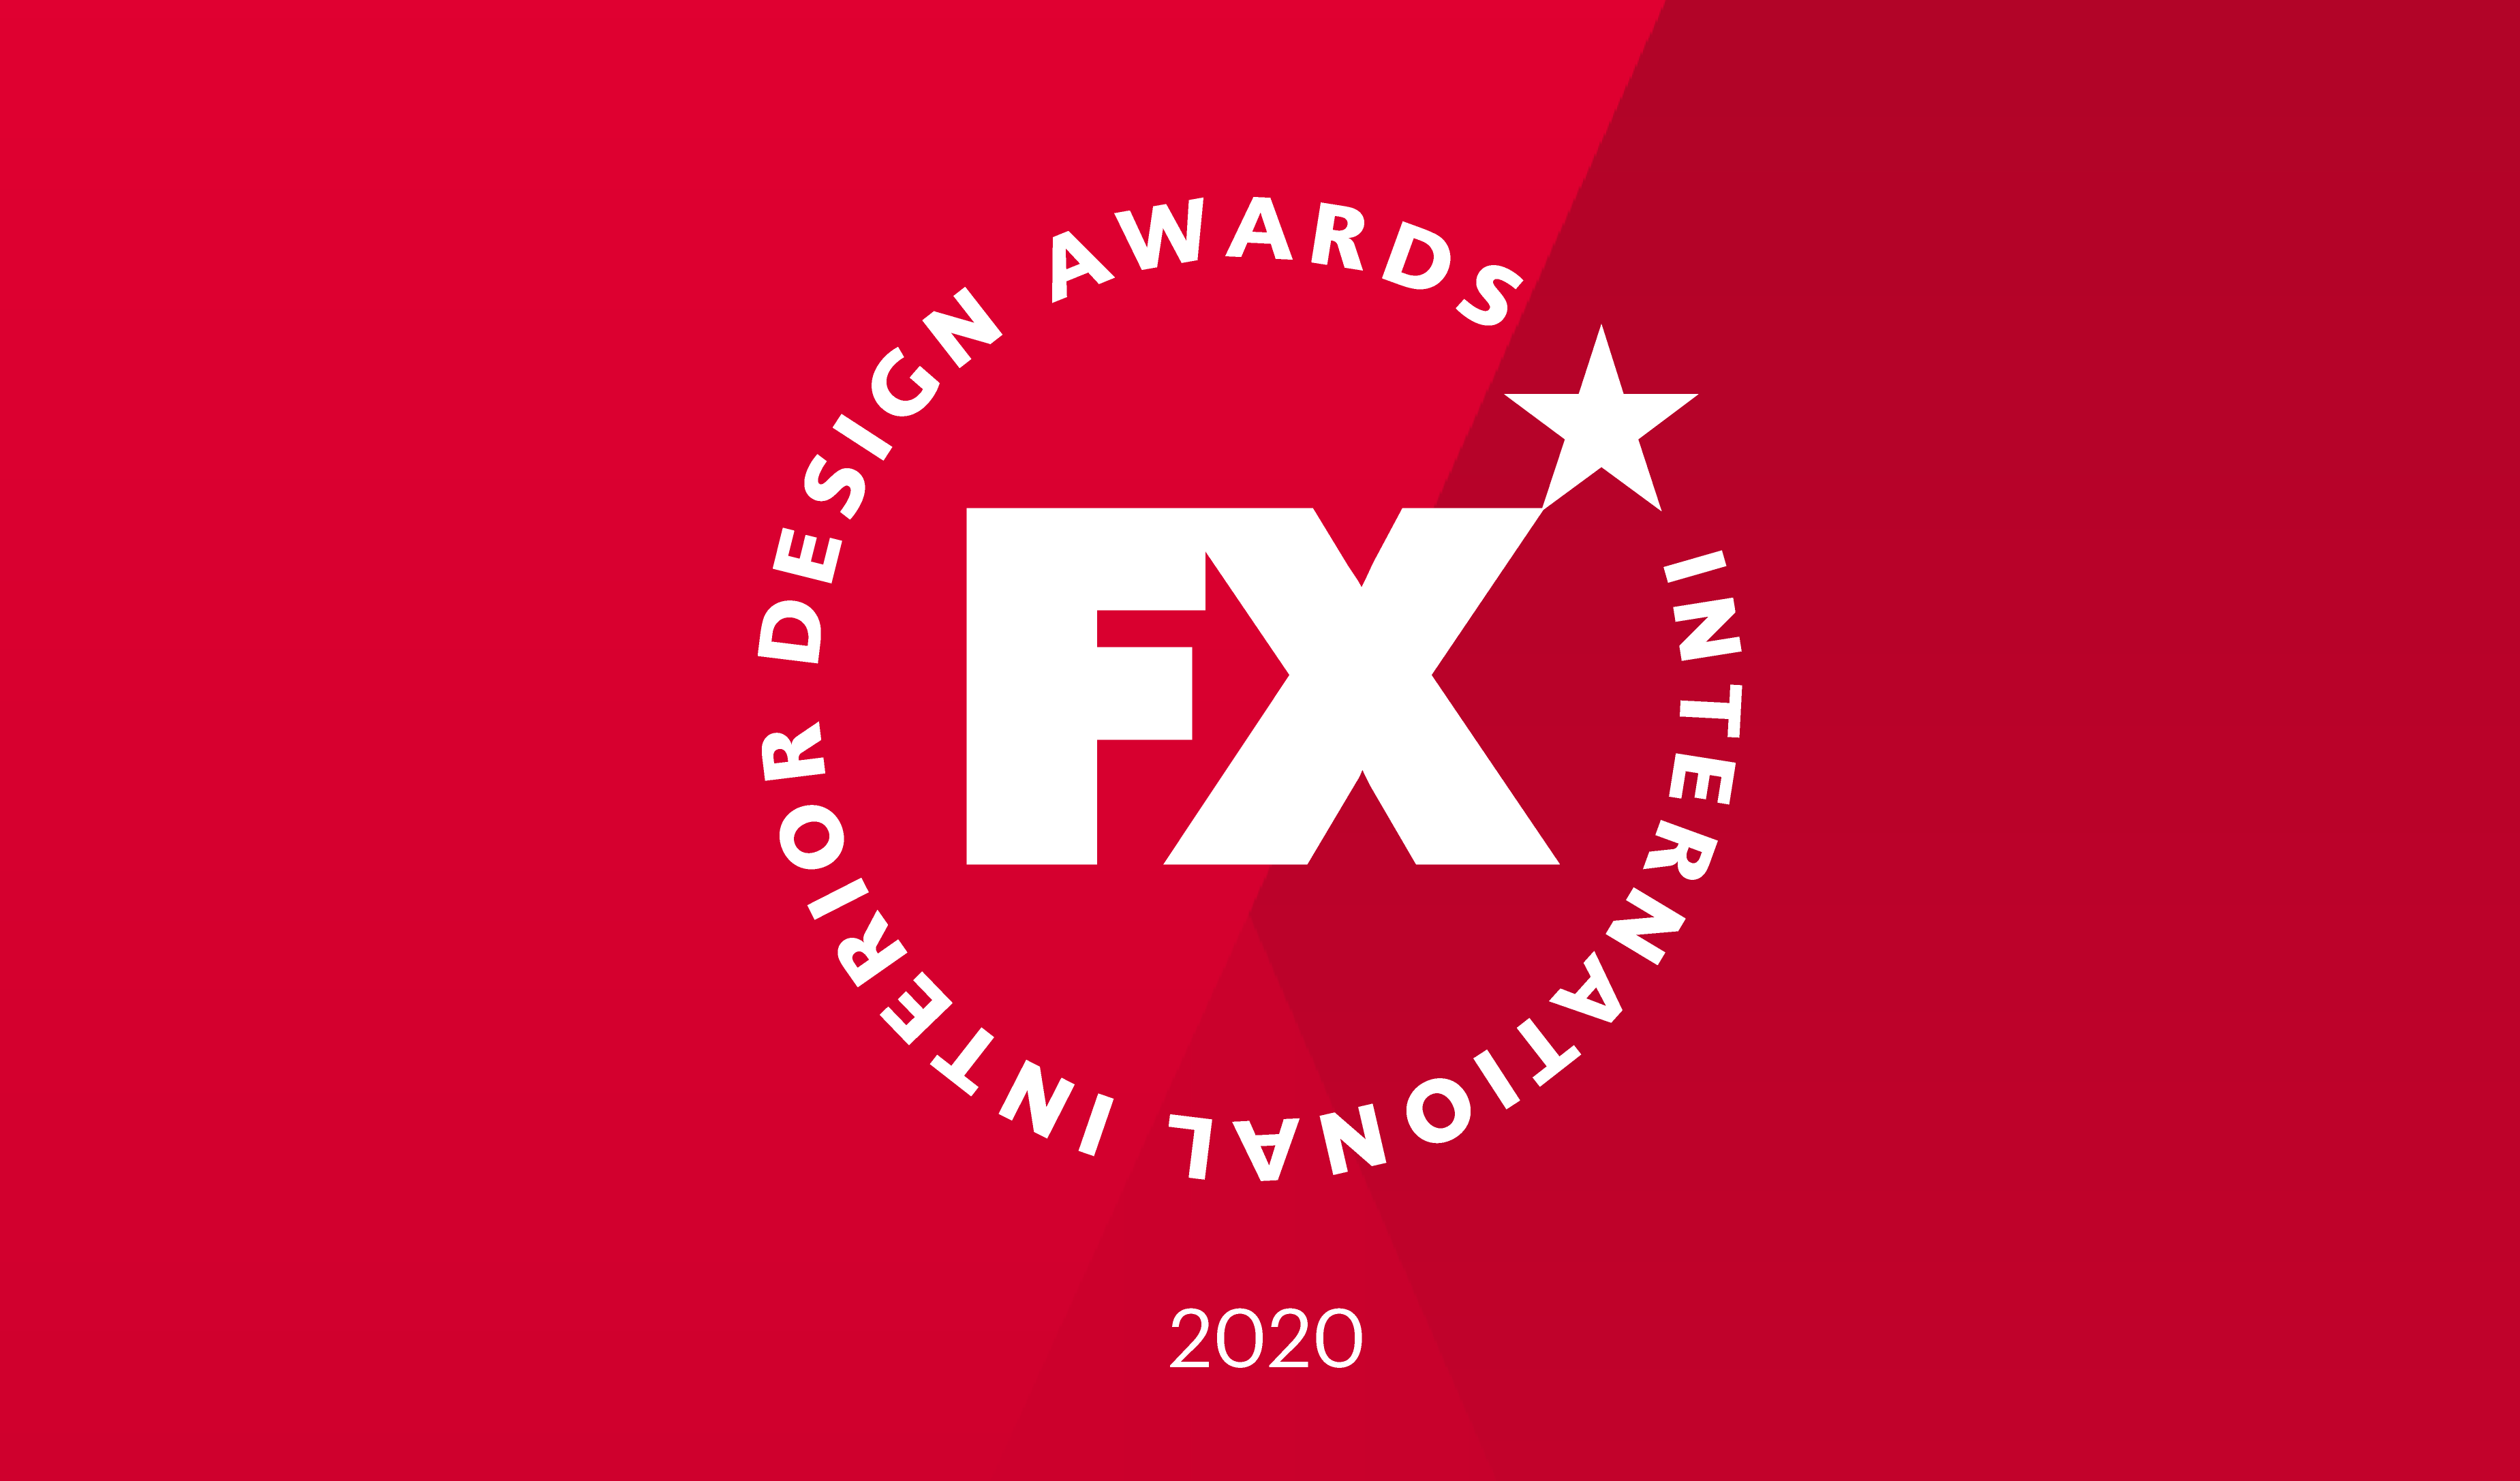 FX Awards 2020: Thinking of entering?